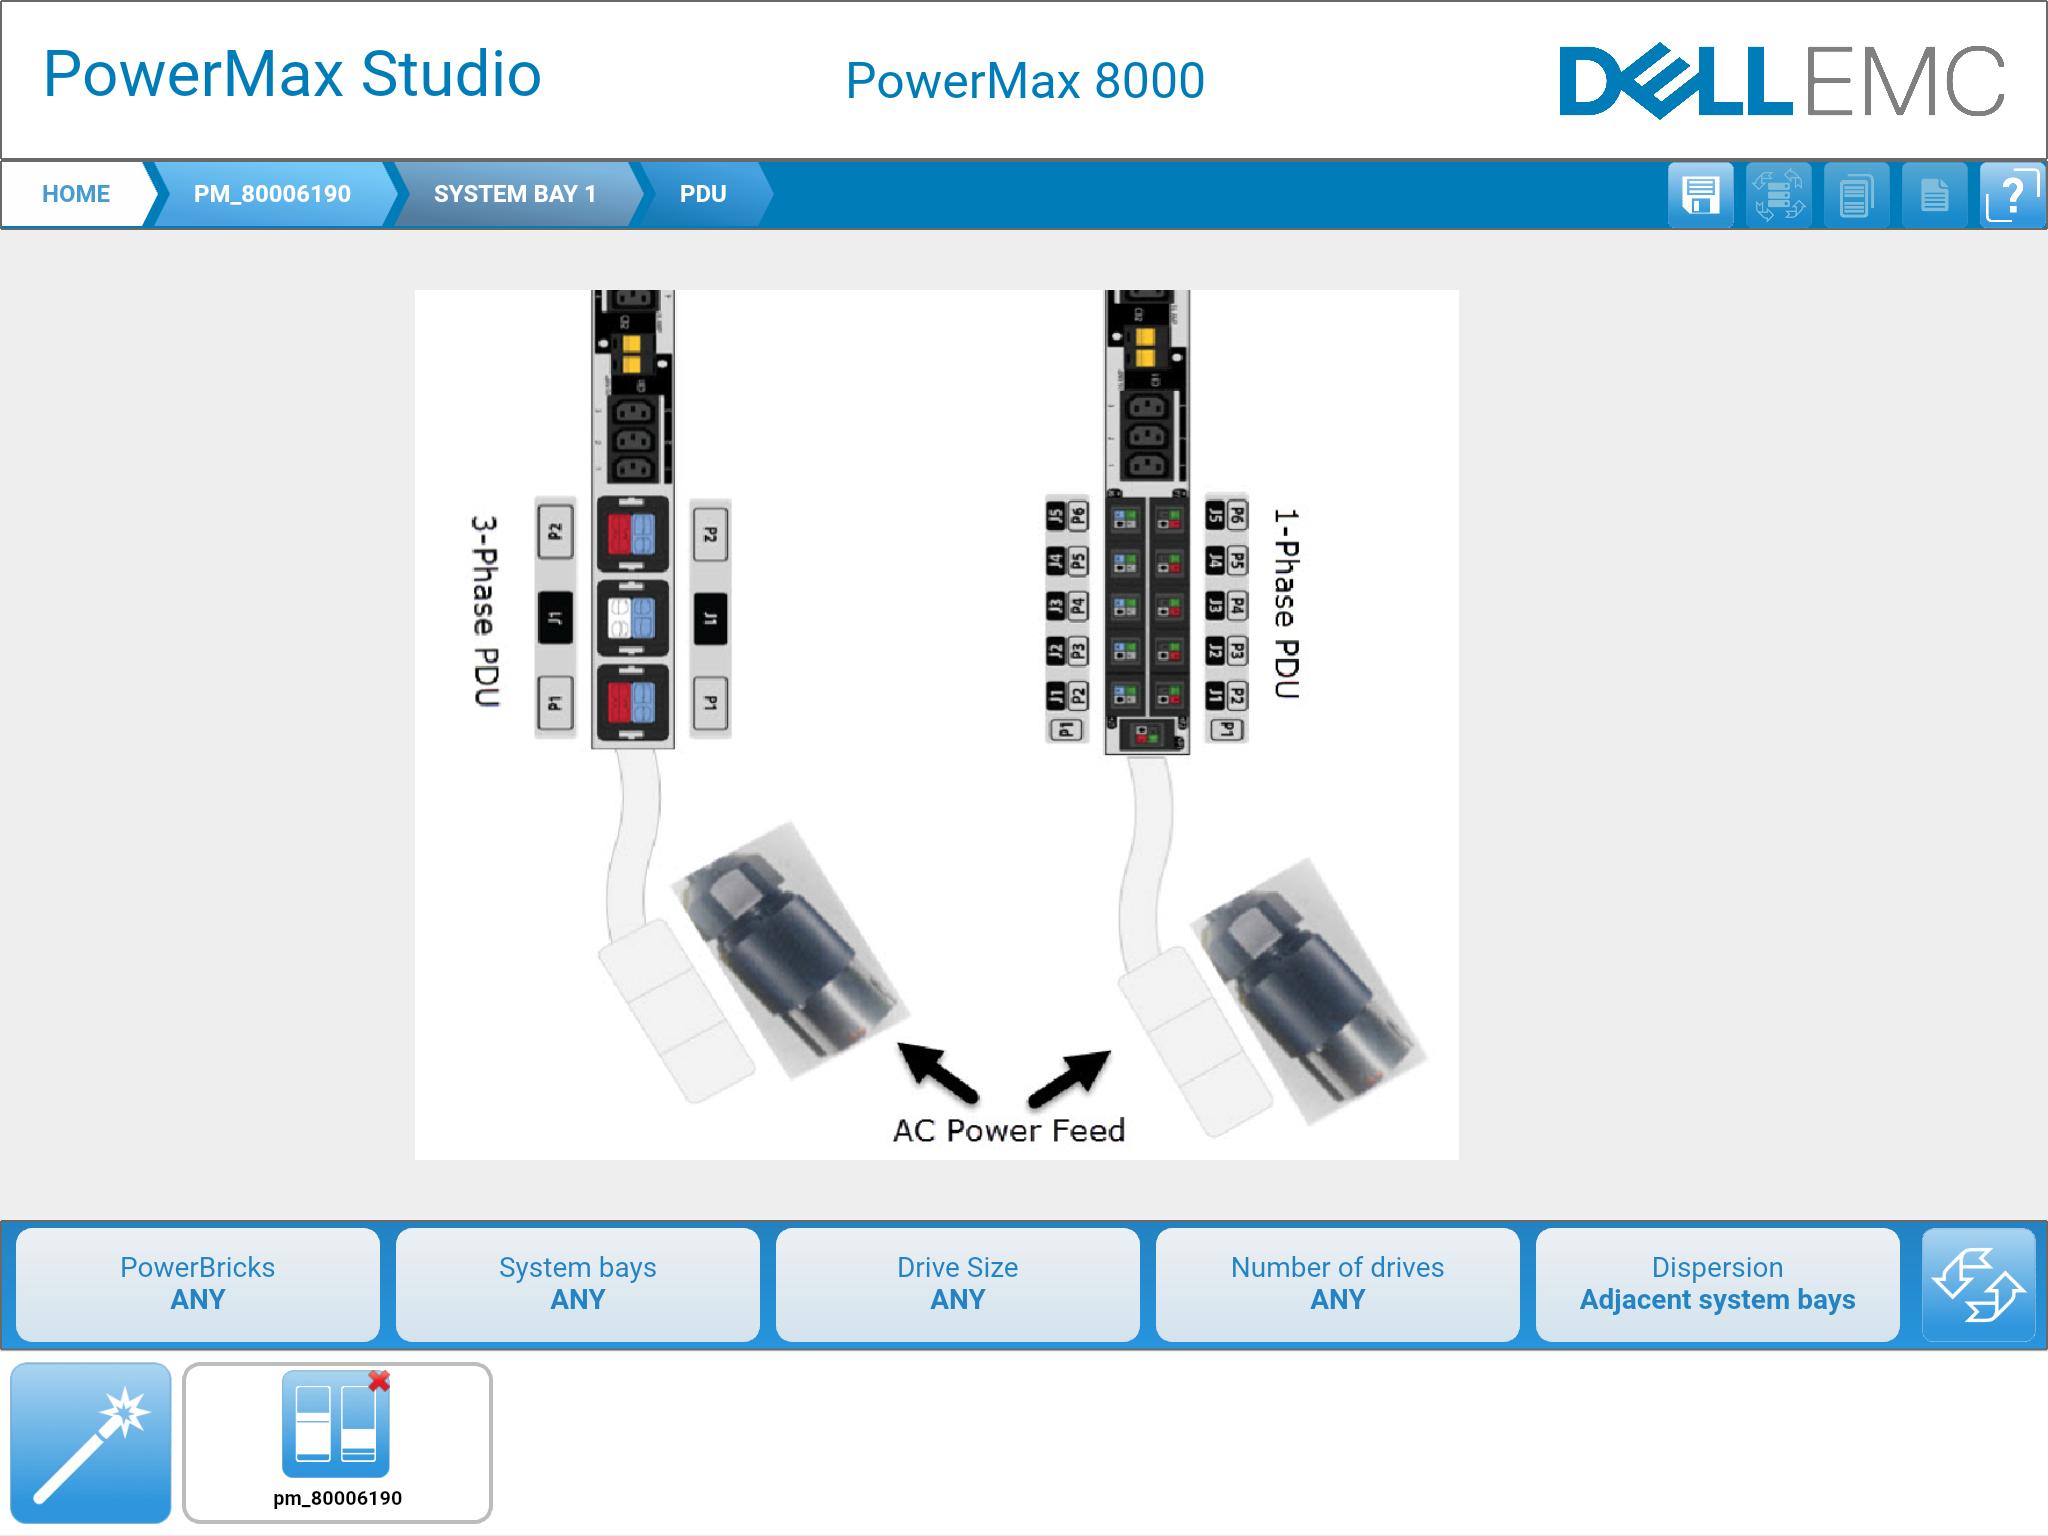 Dell Emc Powermax Studio For Android Apk Download